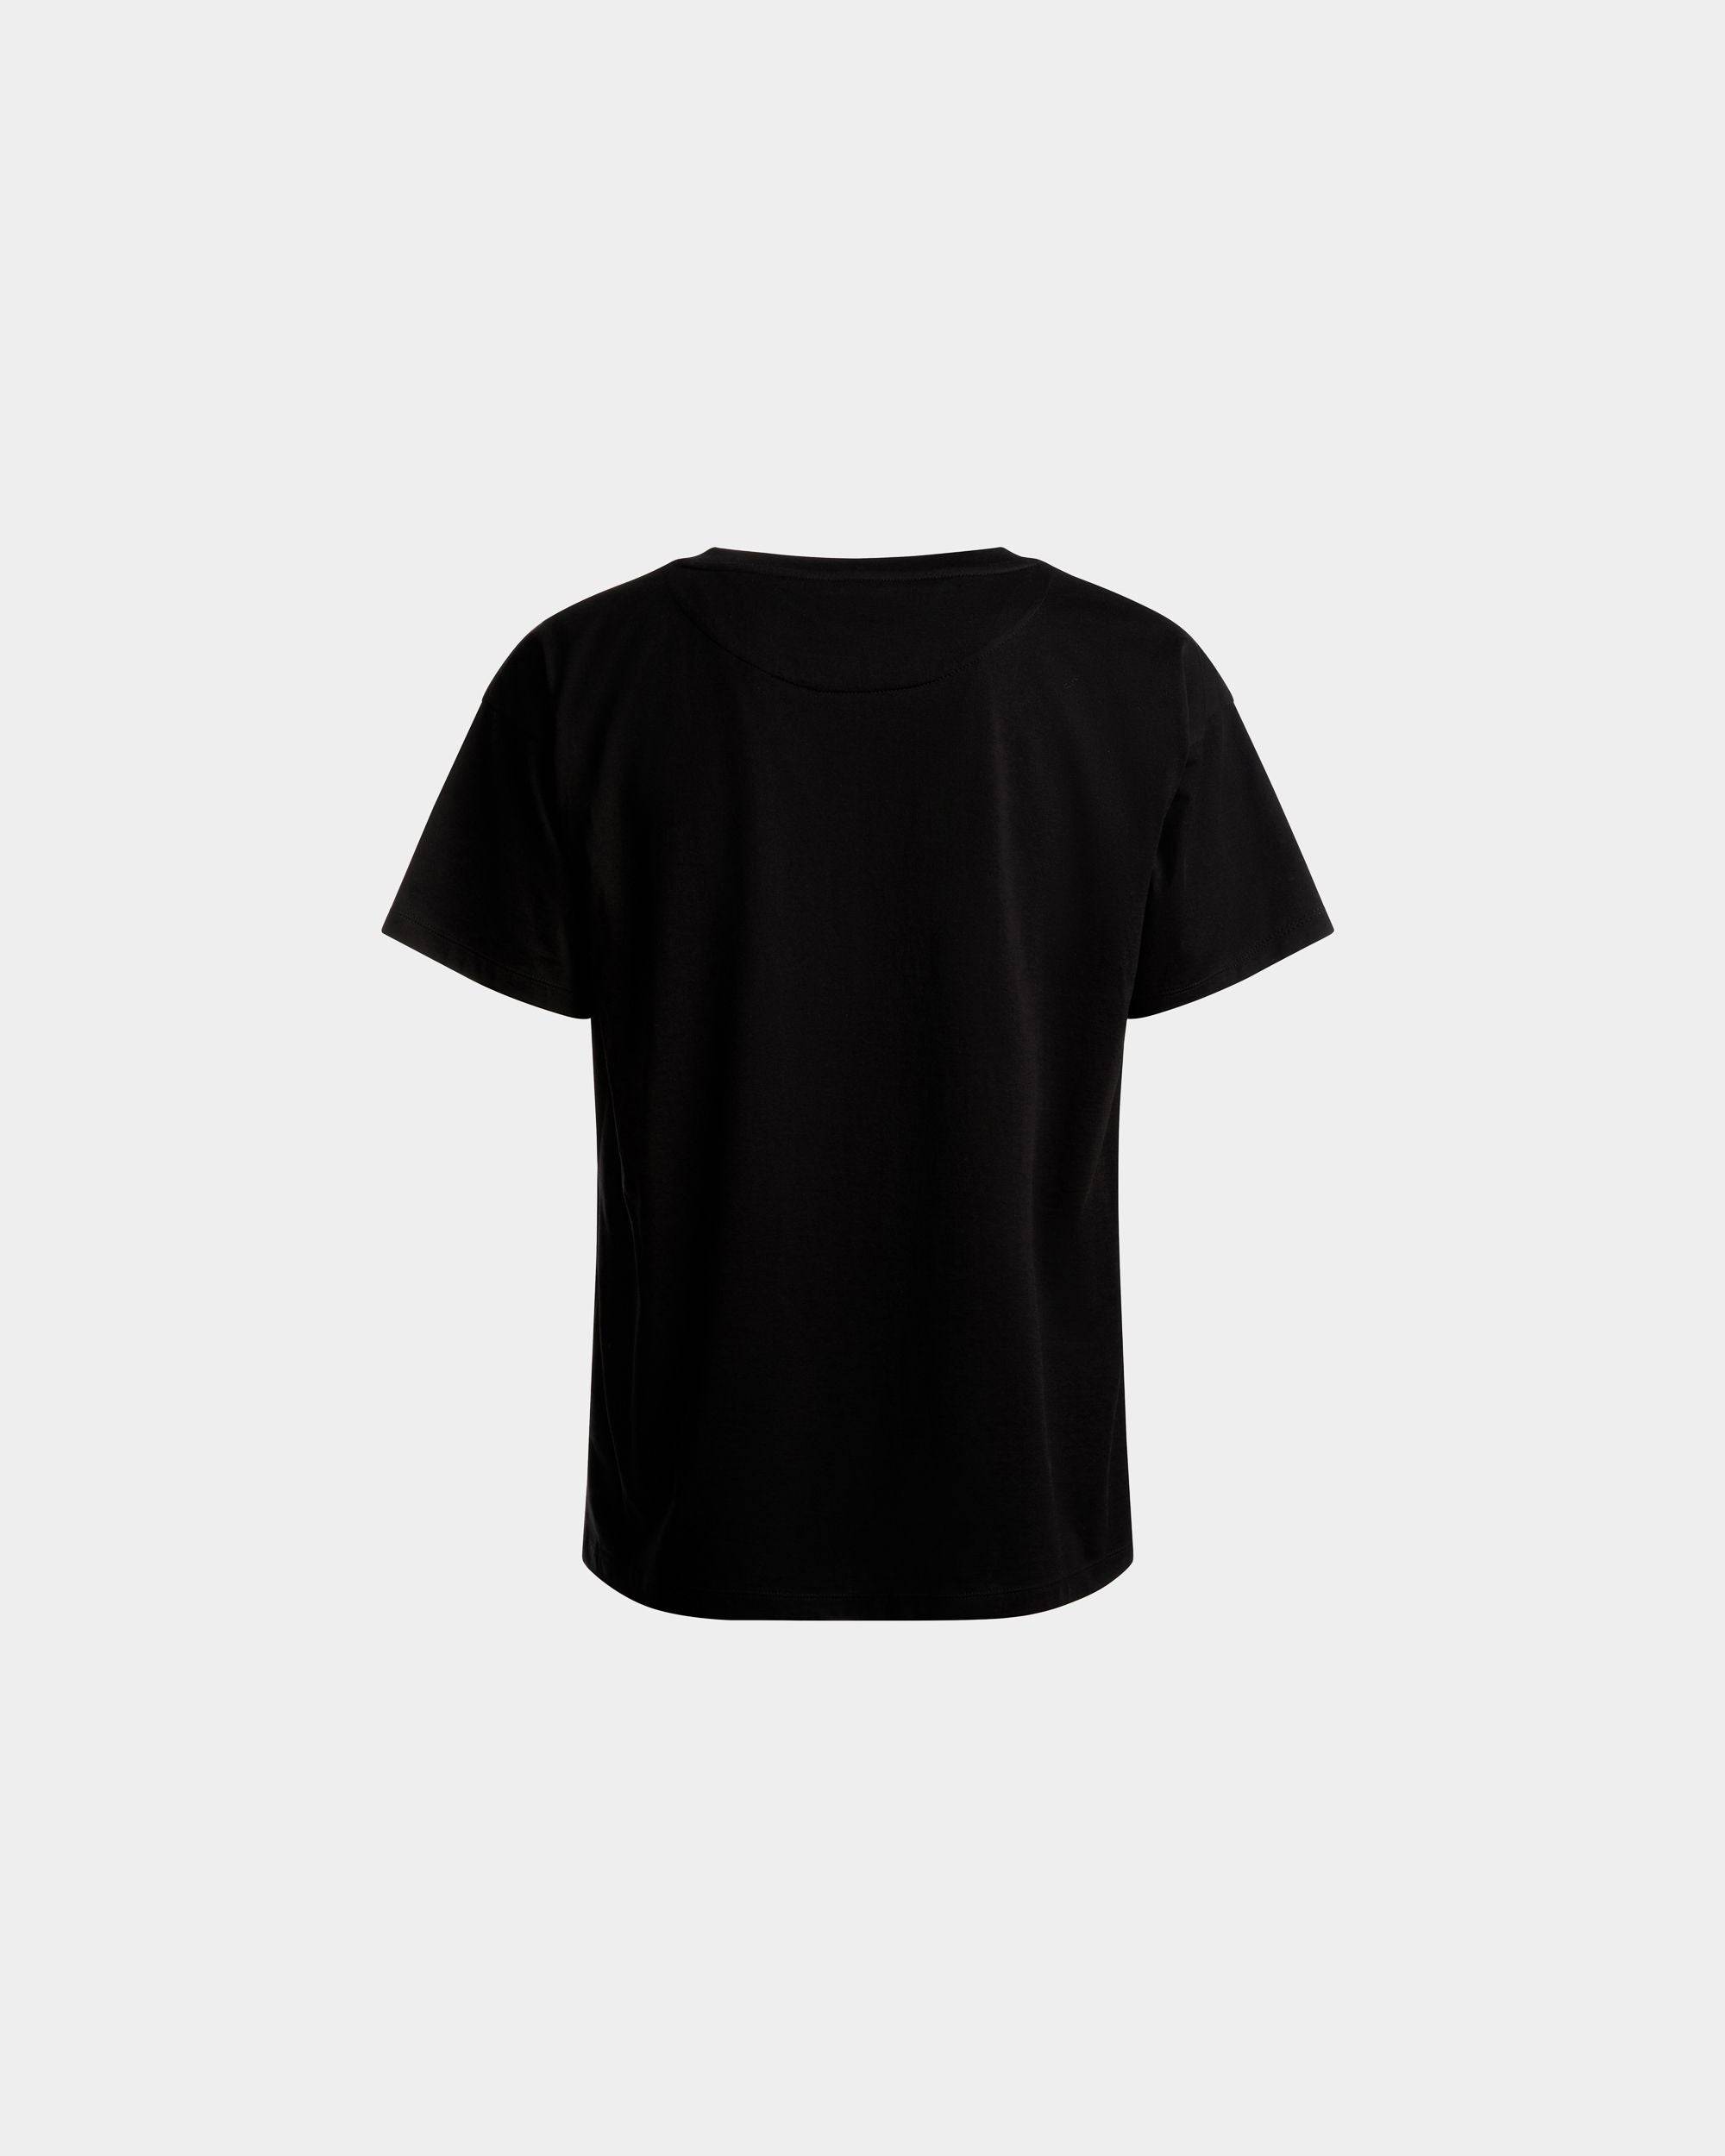 Logo T-Shirt | Men's T-Shirt | Black Cotton | Bally | Still Life Back